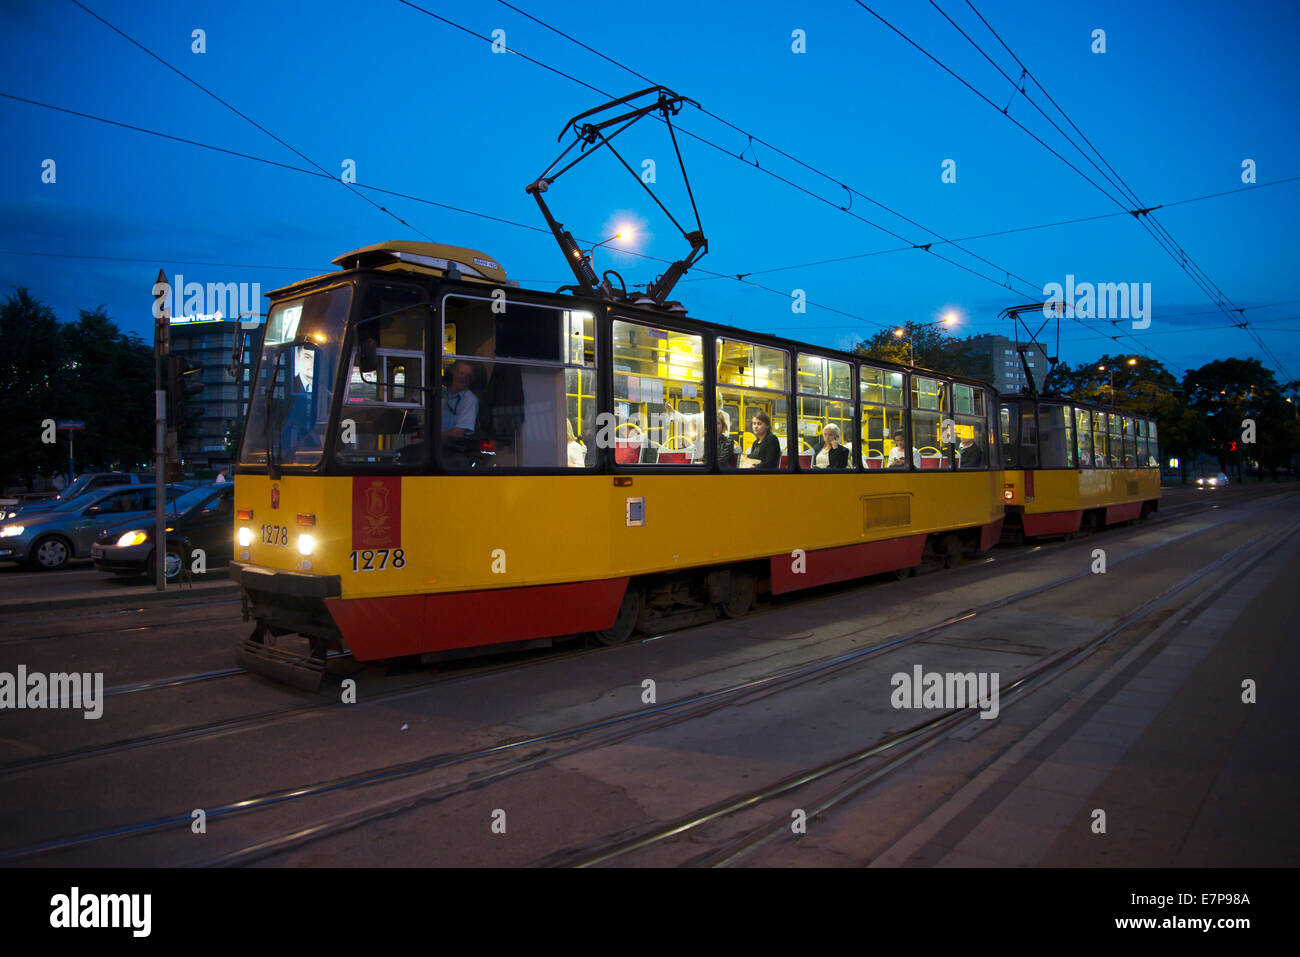 June 2014: Tram, public transport at night in Warsaw Poland, Europe Stock Photo